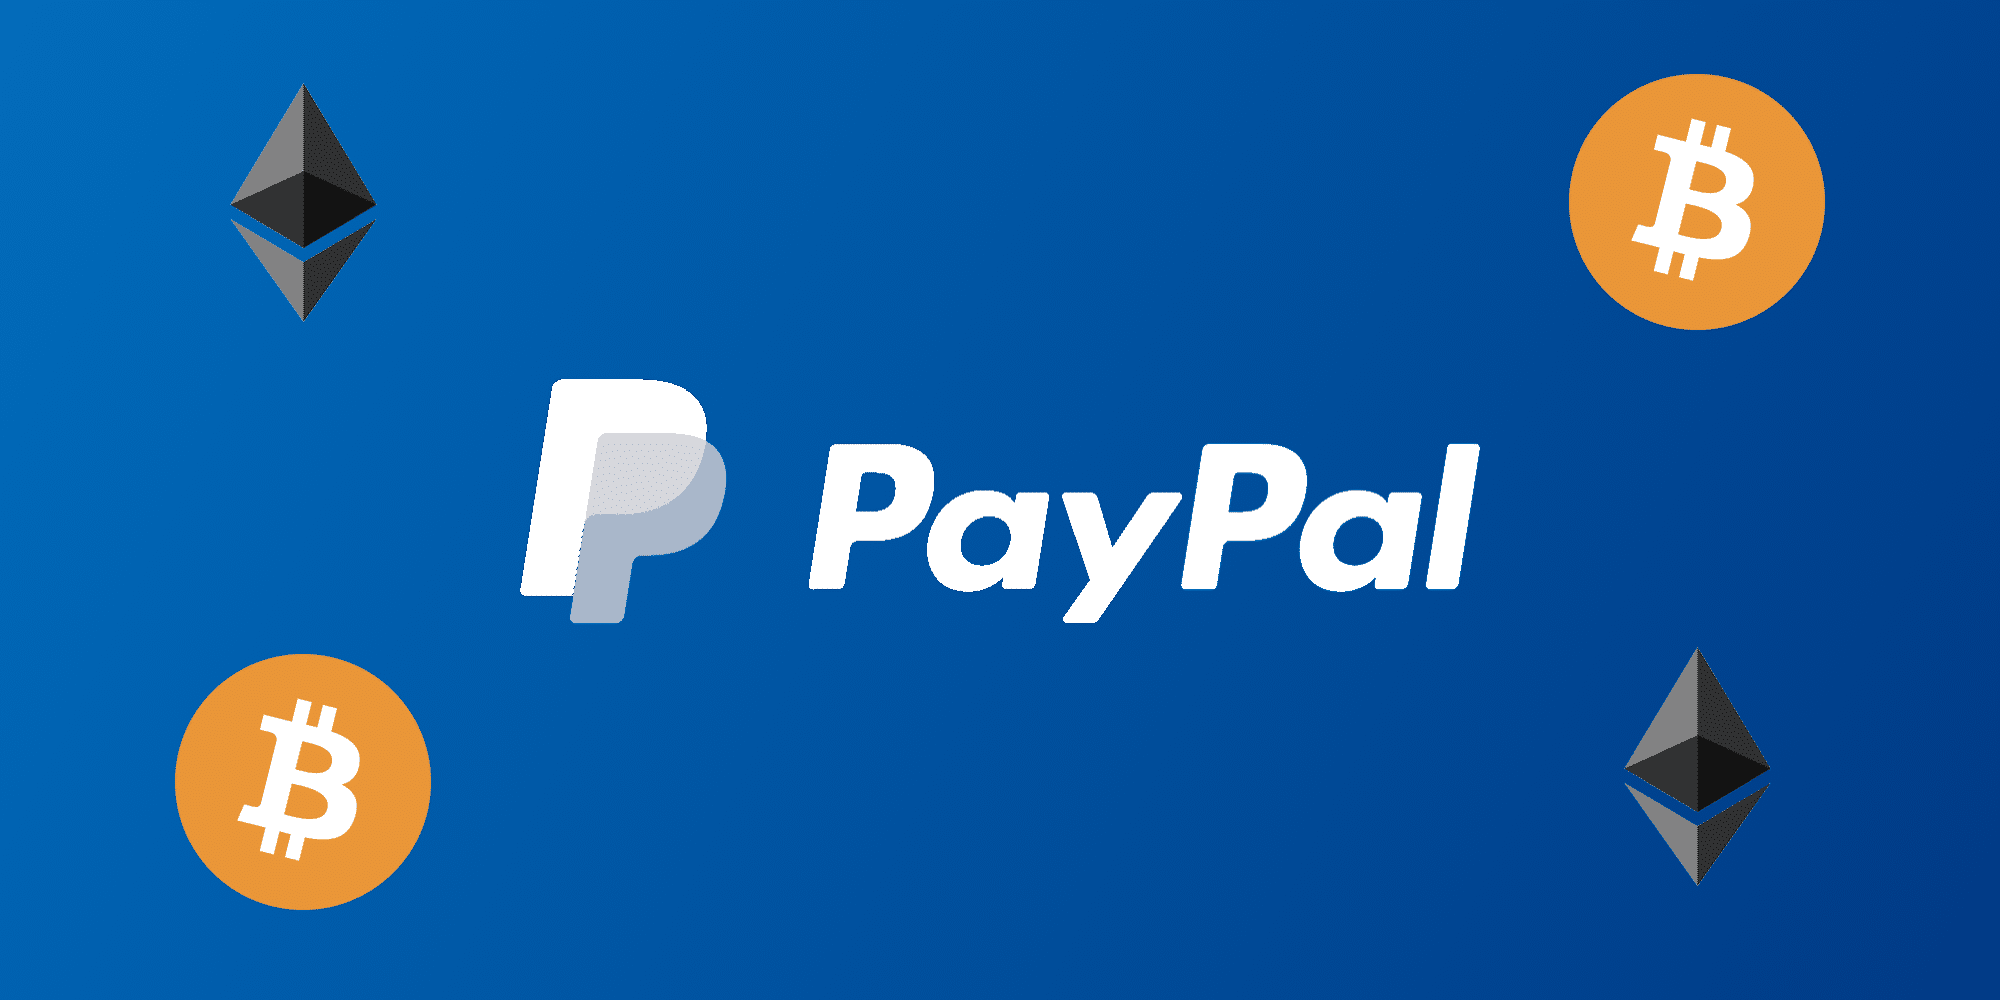 A PayPal most elfogadta az Bitcoin-t, de valami nincs rendben